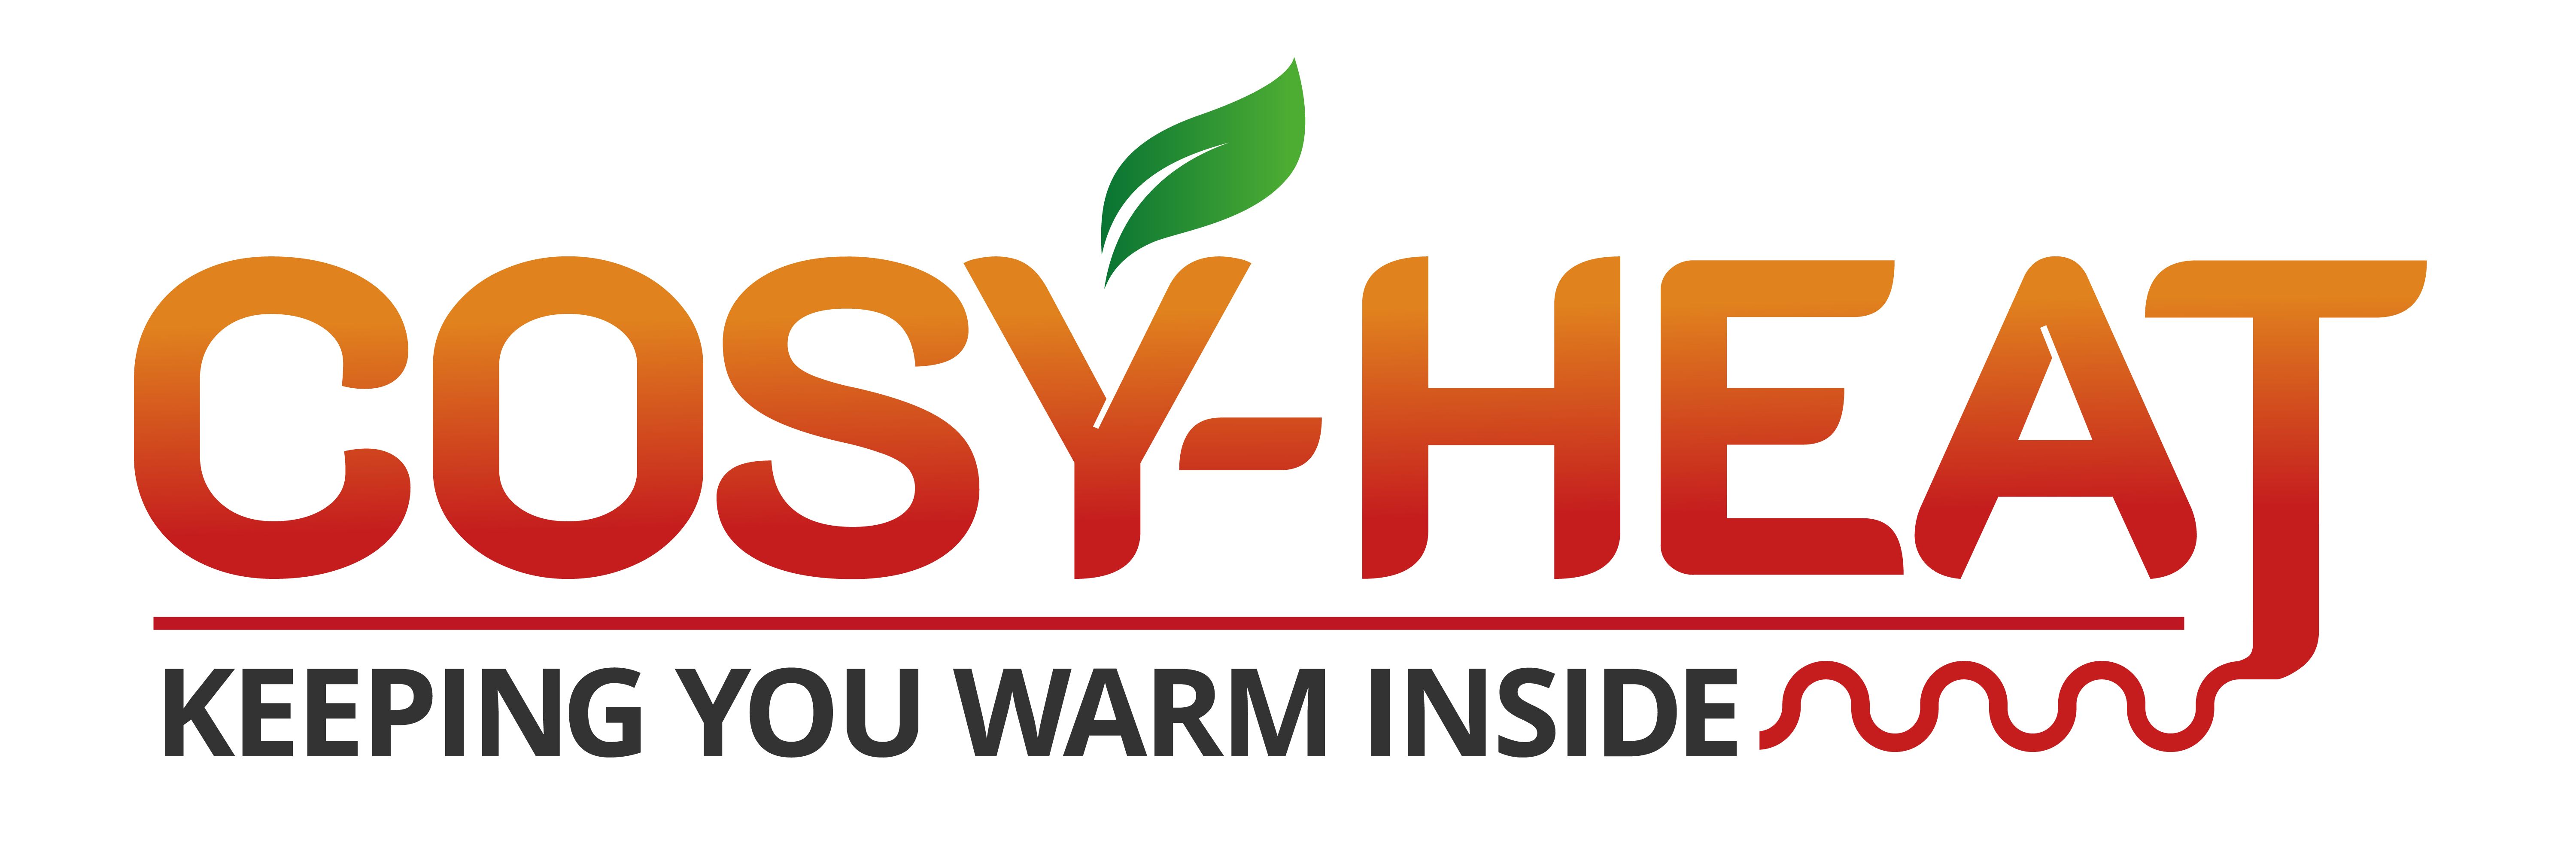 Cosy-heat Ltd